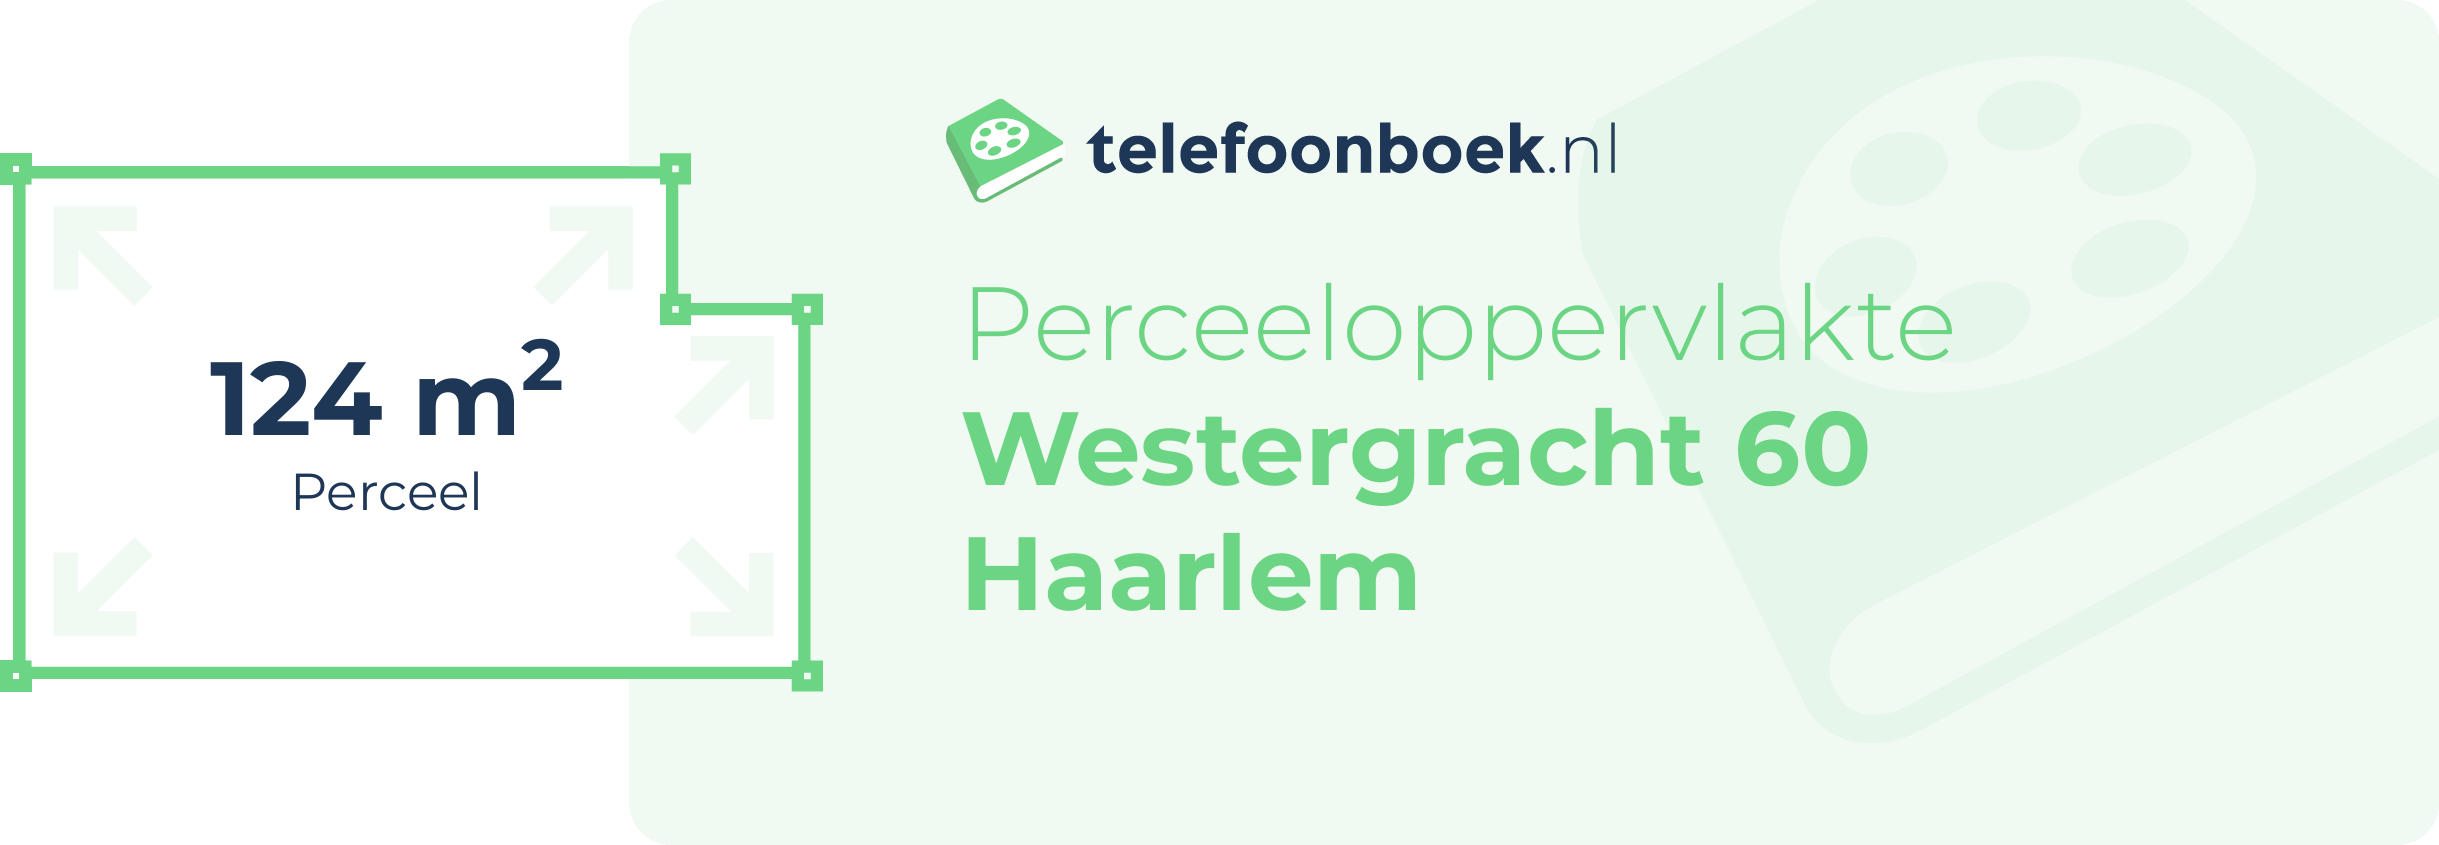 Perceeloppervlakte Westergracht 60 Haarlem